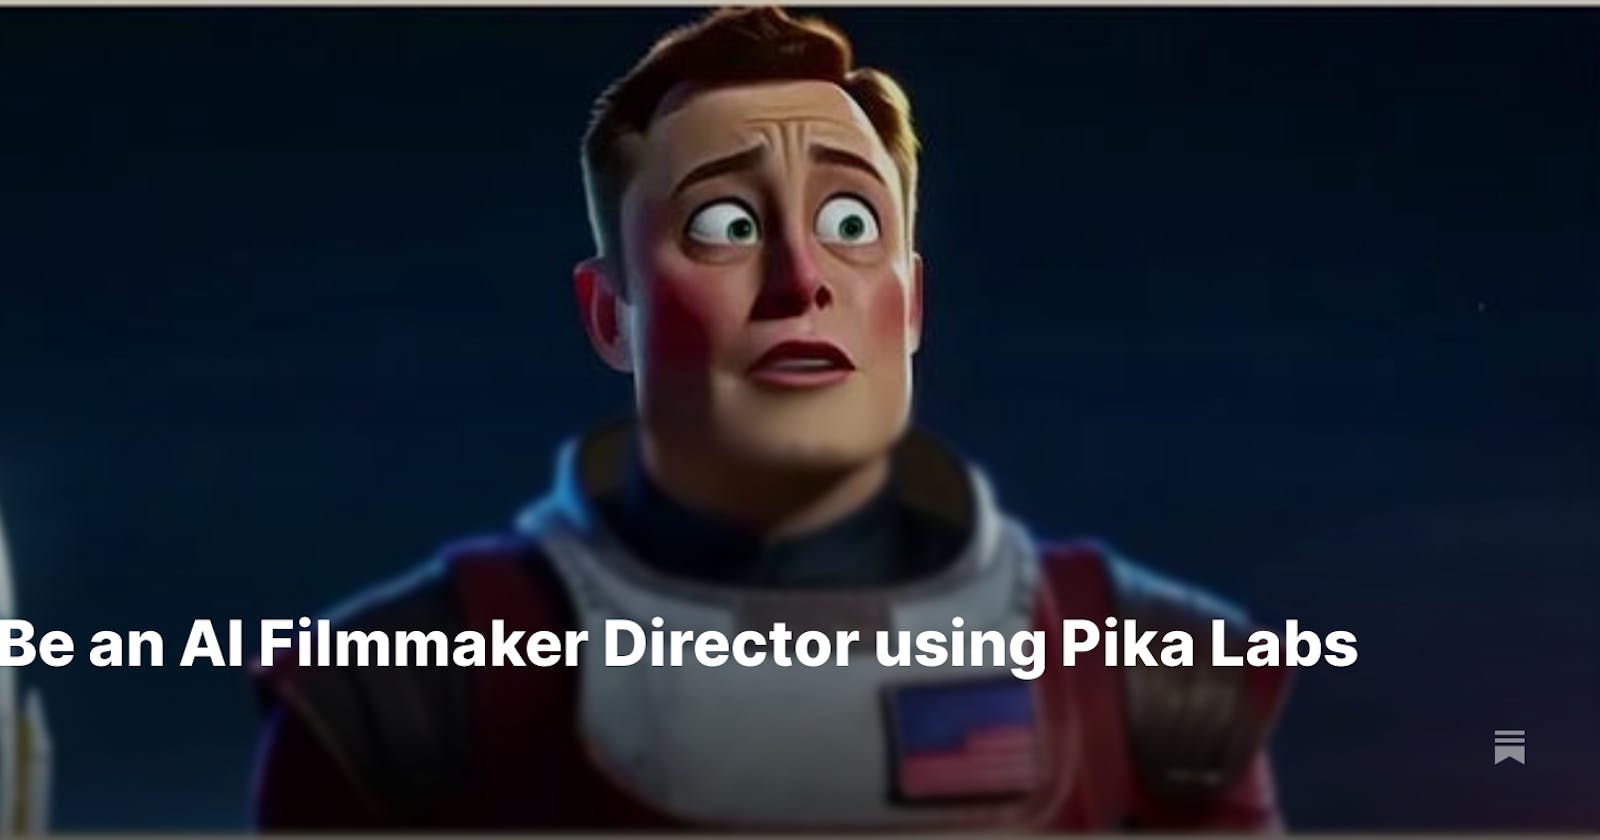 Be an AI Filmmaker Director using Pika Labs